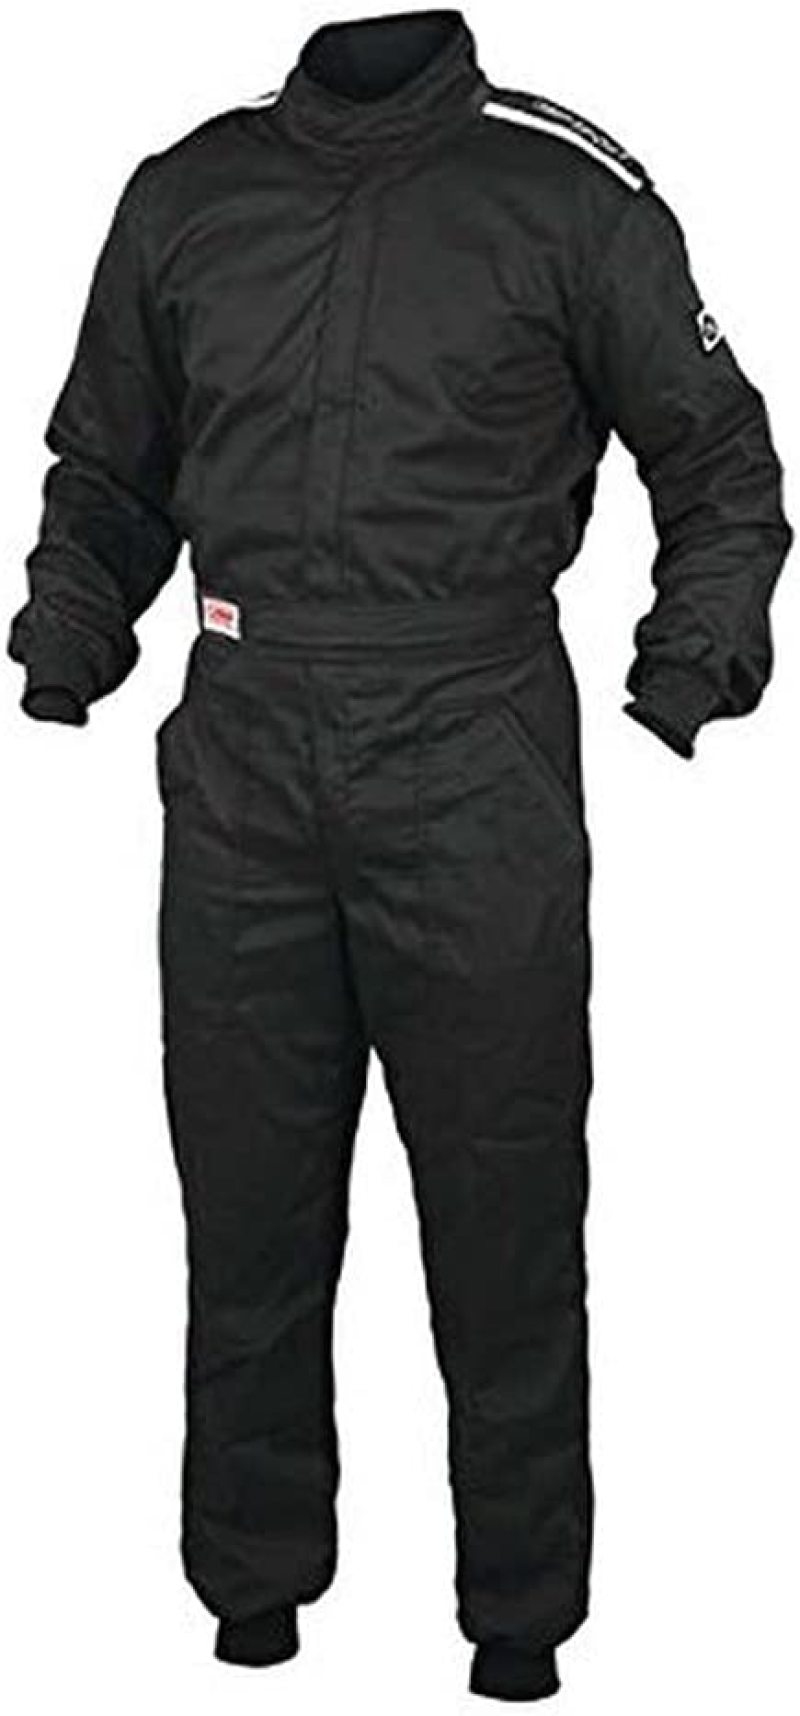 OMP Os 10 Suit - X Large (Black) - IA0-1901-A01-071-XL